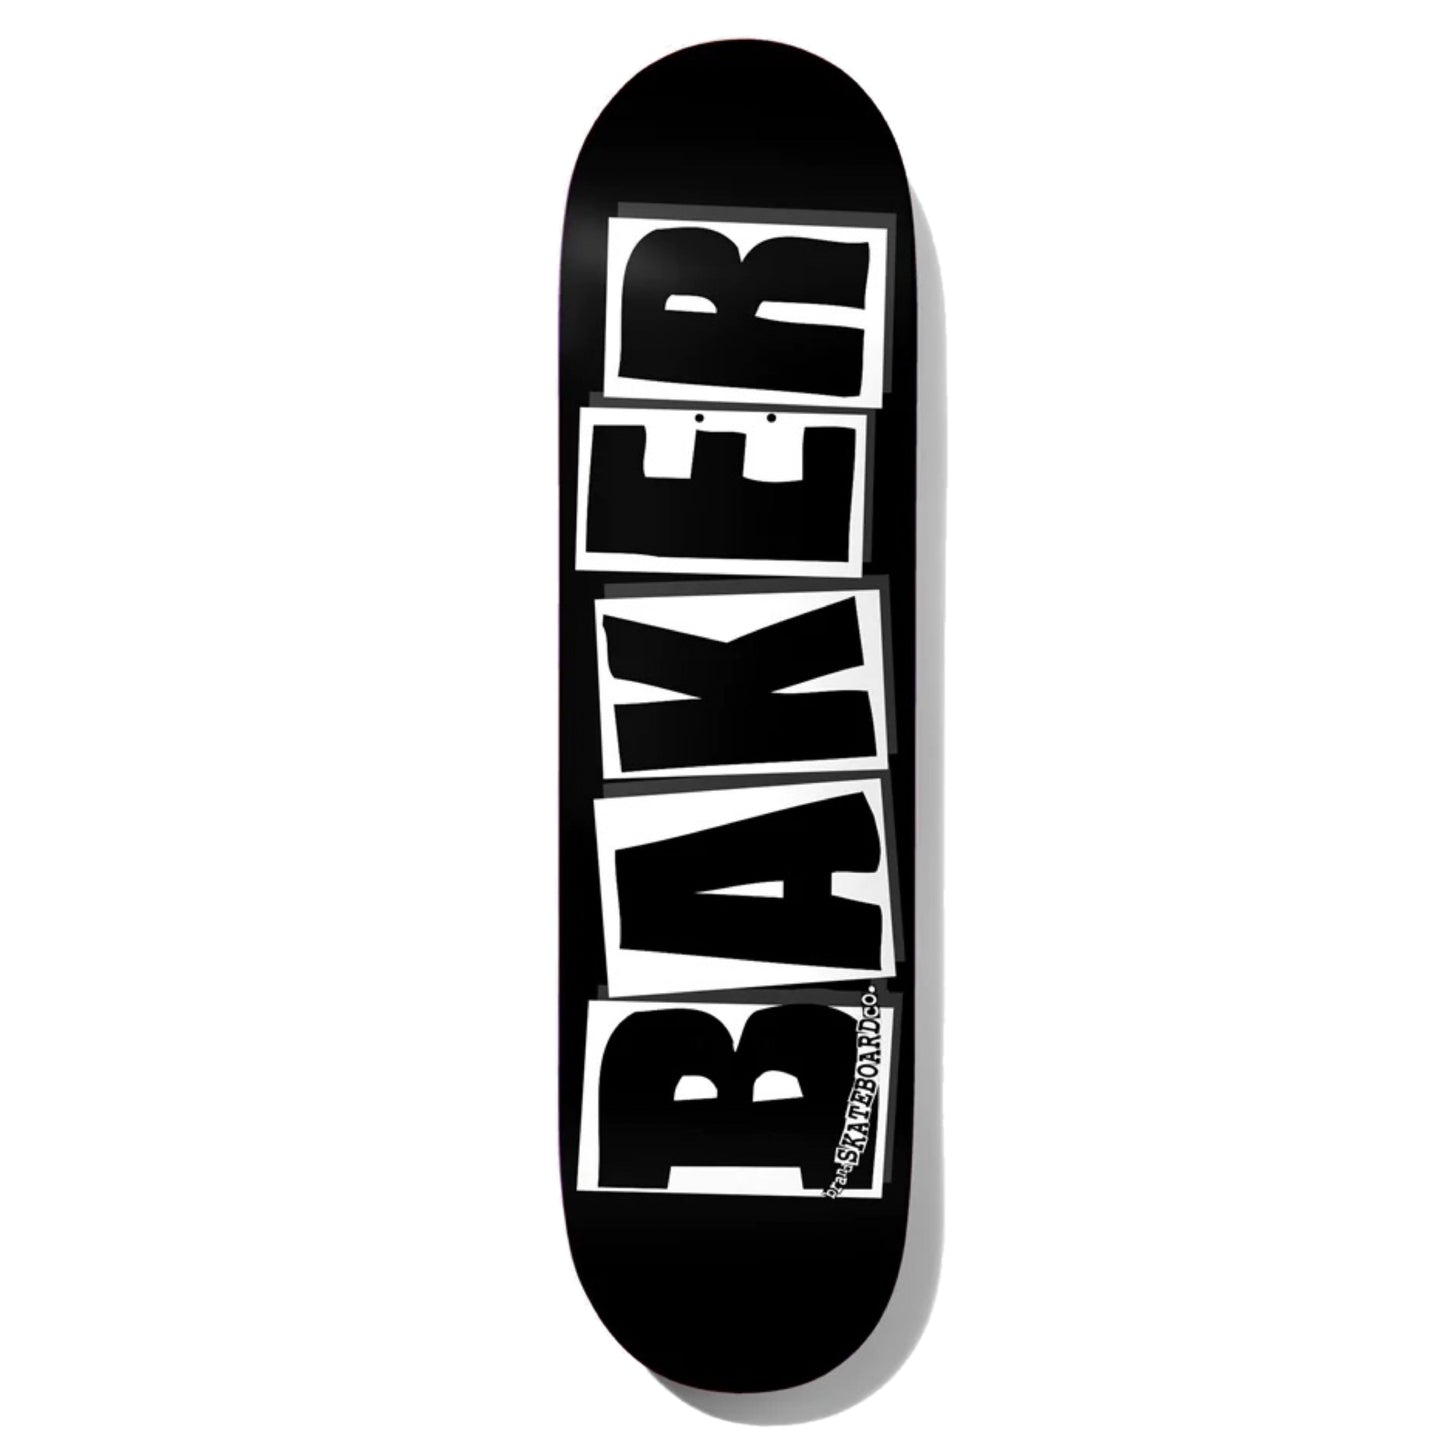 Baker Team Logo Black/White Skateboard Deck; Black background; Lettering spells out “Baker” in classic Baker logo which consists of black letters framed in white rectangles; smaller white and black text spells out “brand Skateboard Co.”